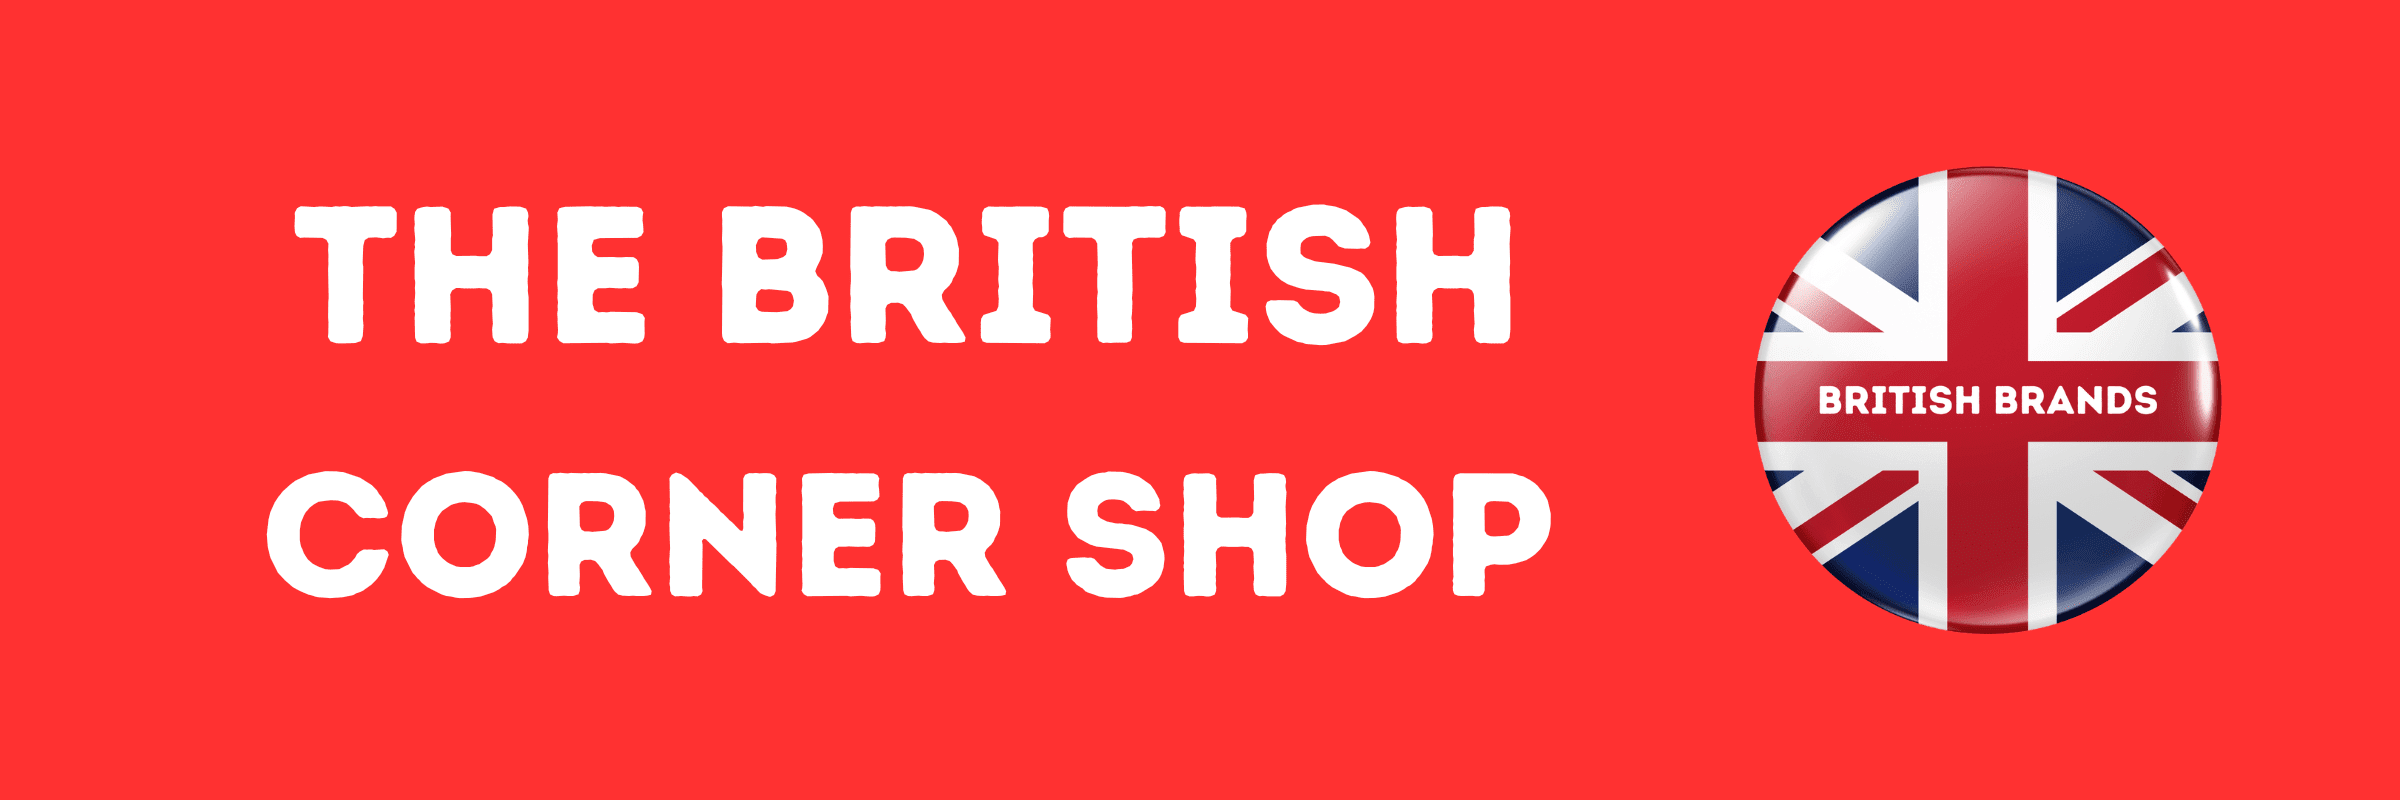 the british corner shop, online groceries delivery worldwide